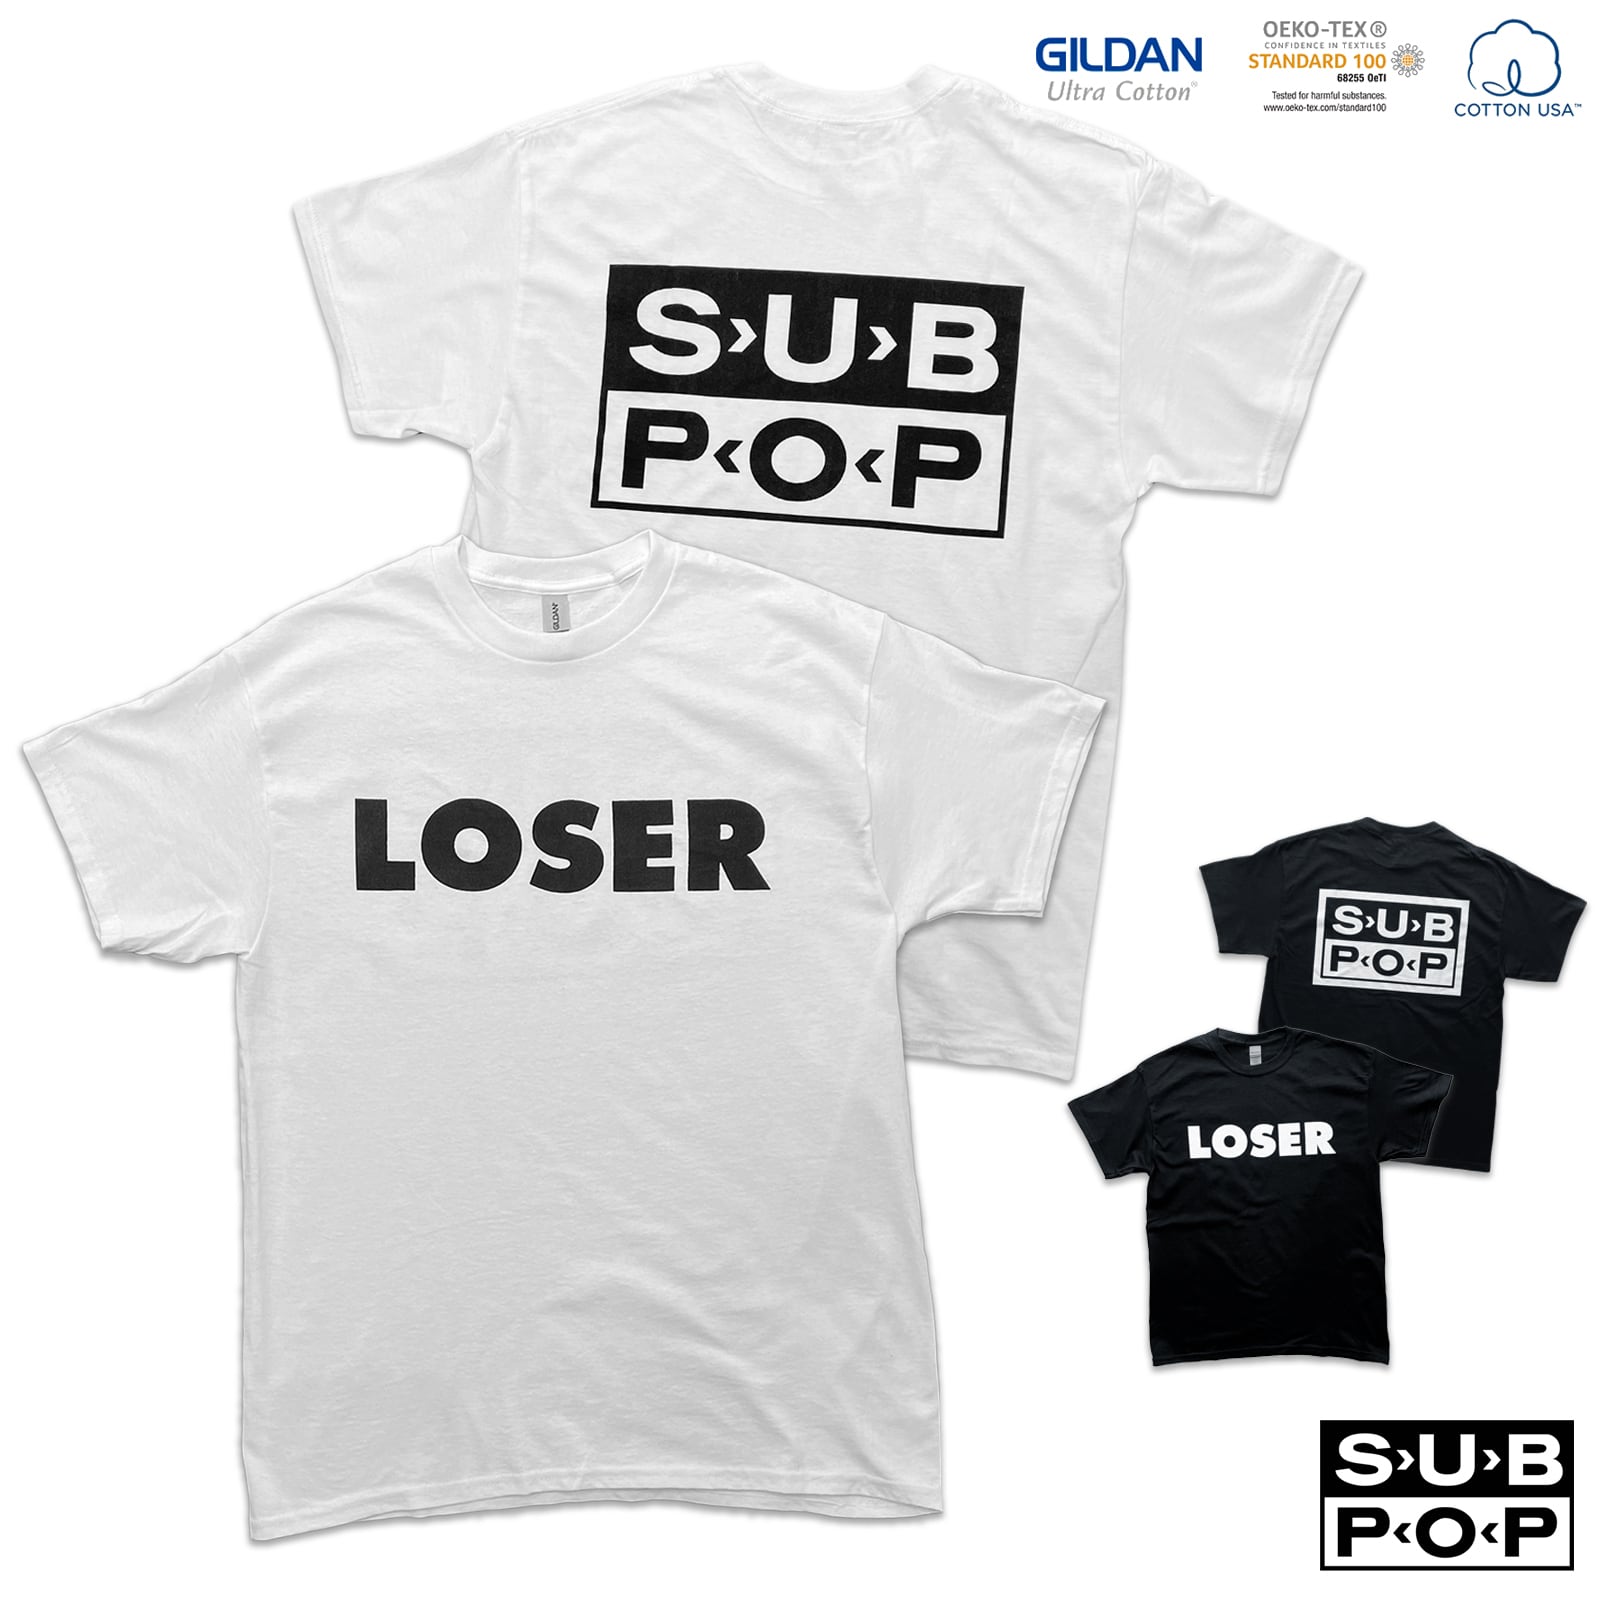 SUB POP 「LOSER 」 オルタナ ロック グランジ バンド Tシャツ 【GILDAN USA】 sstee-subpop-loser |  oguoy/Destroy it Create it Share it